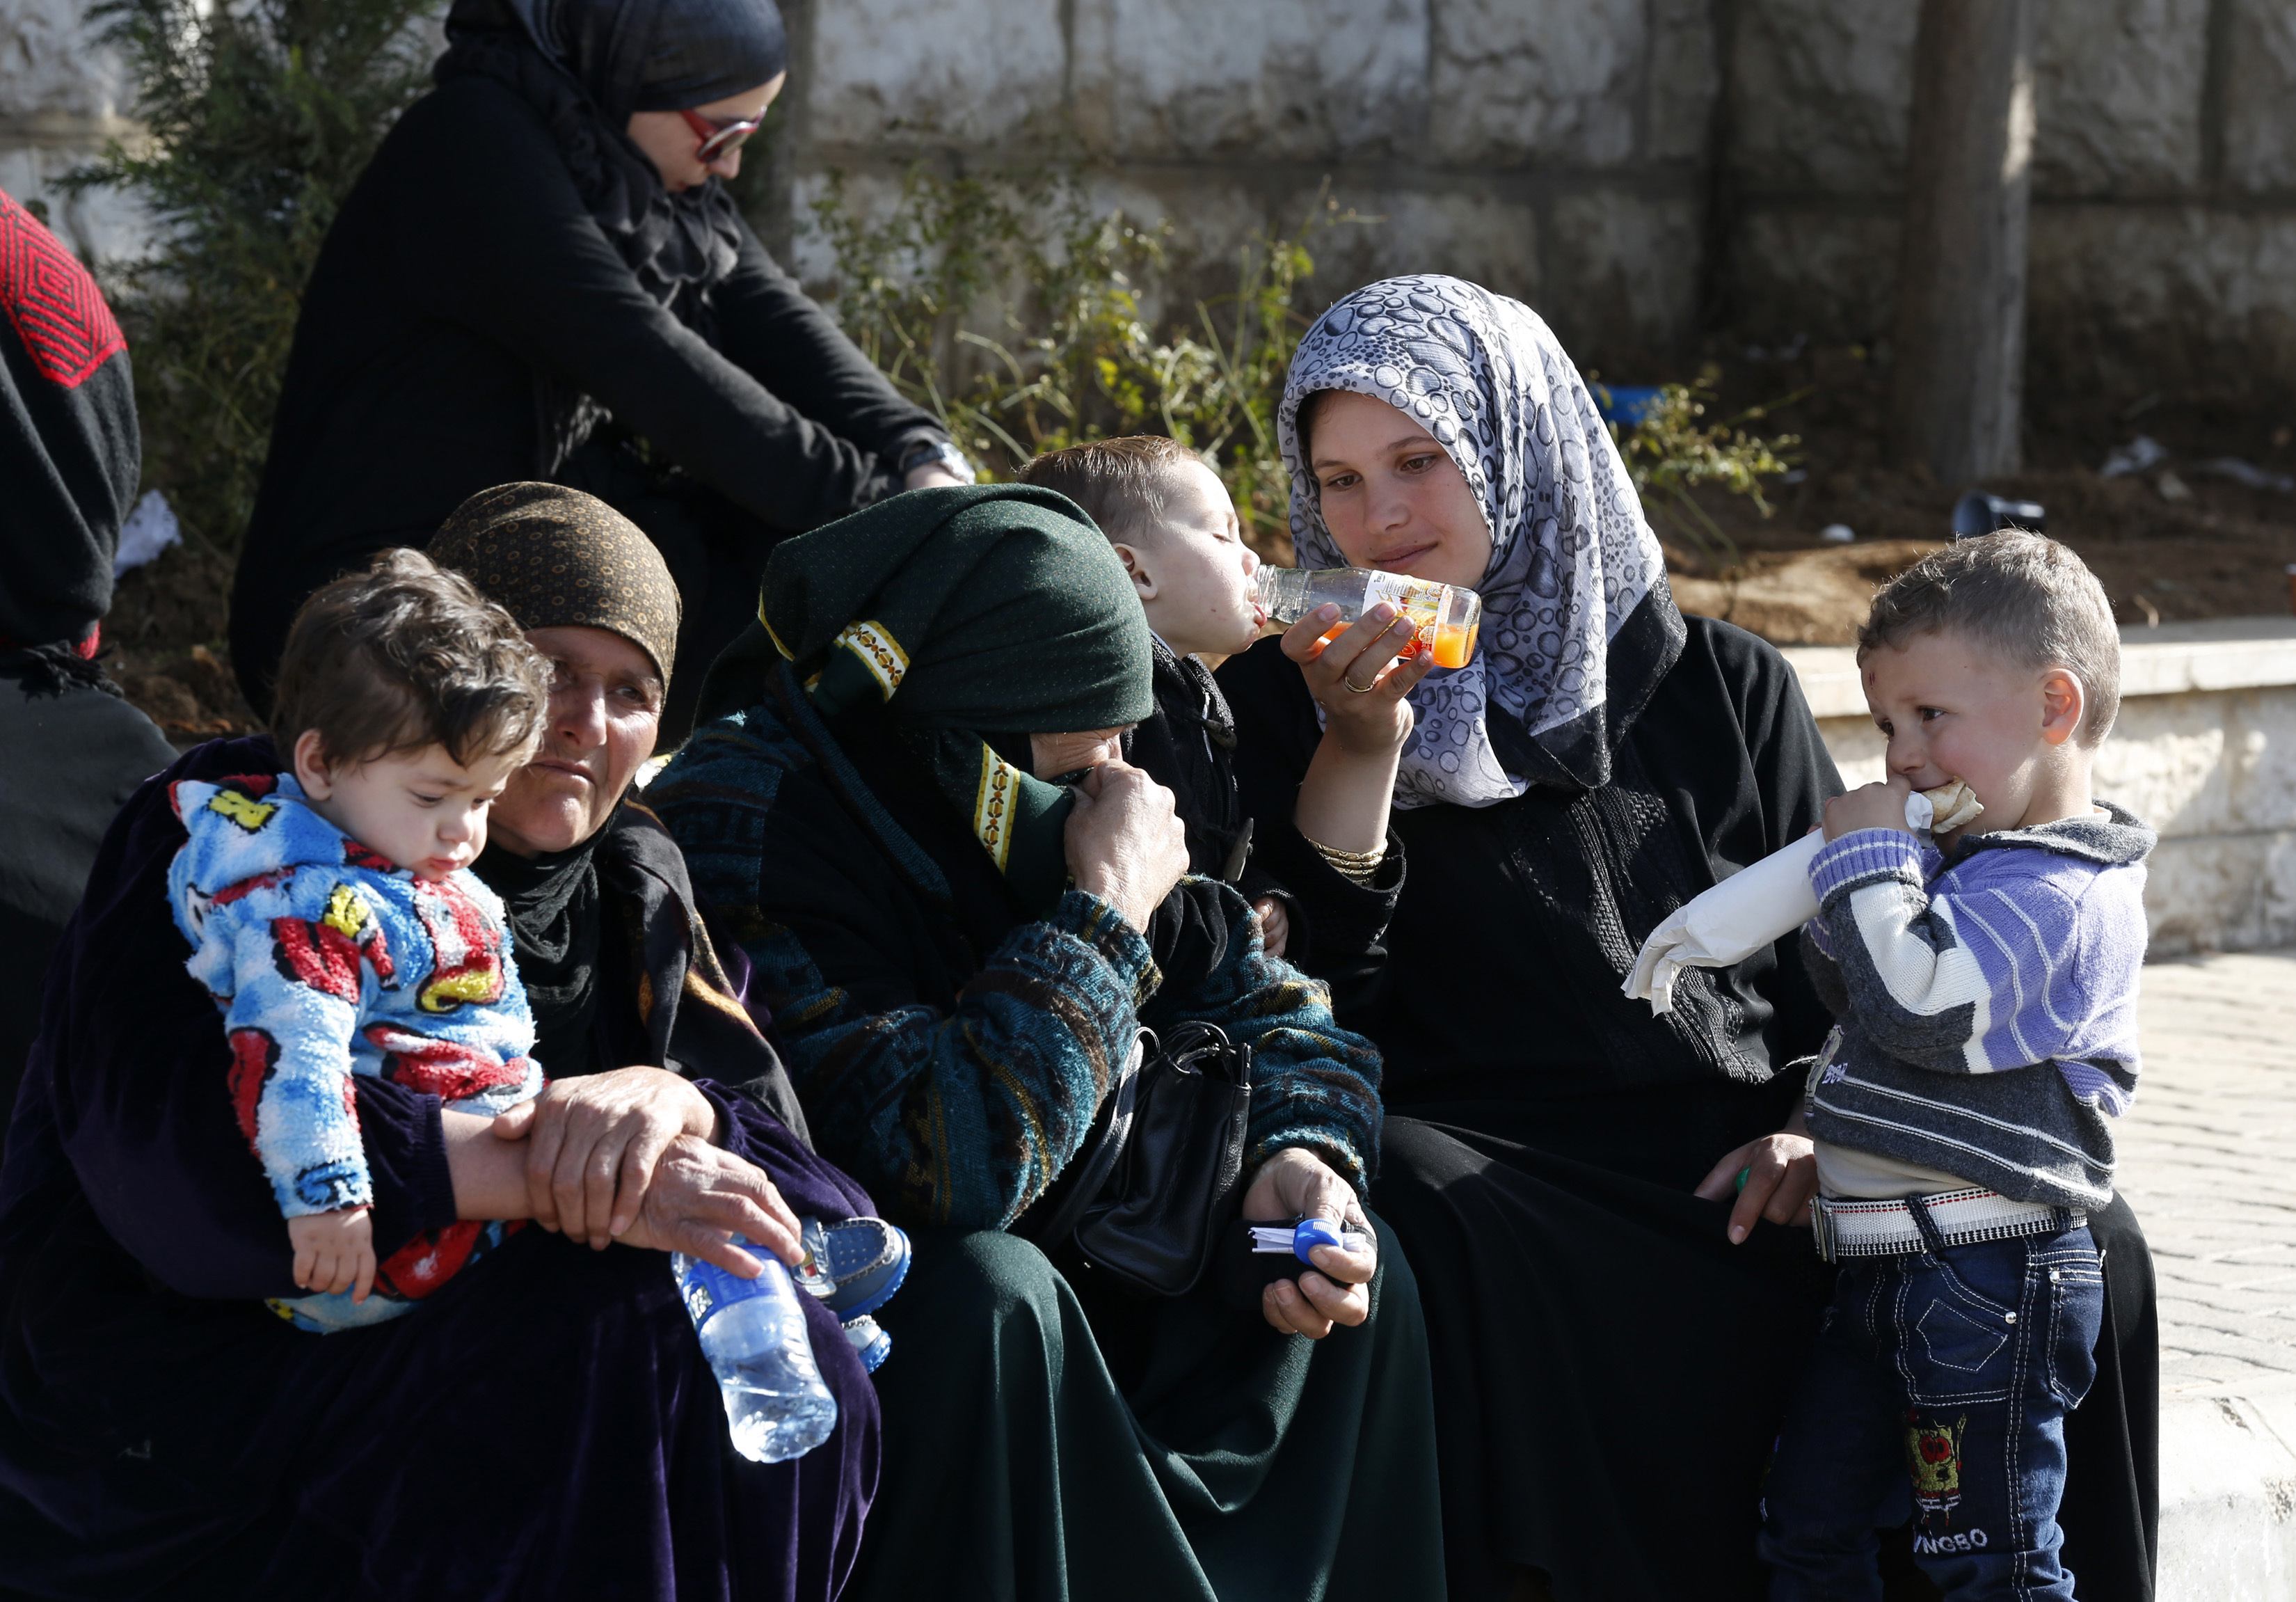 Syria women and children wait to get a visa stamp to enter Lebanon. Credit: Jamal Saidi/ Reuters